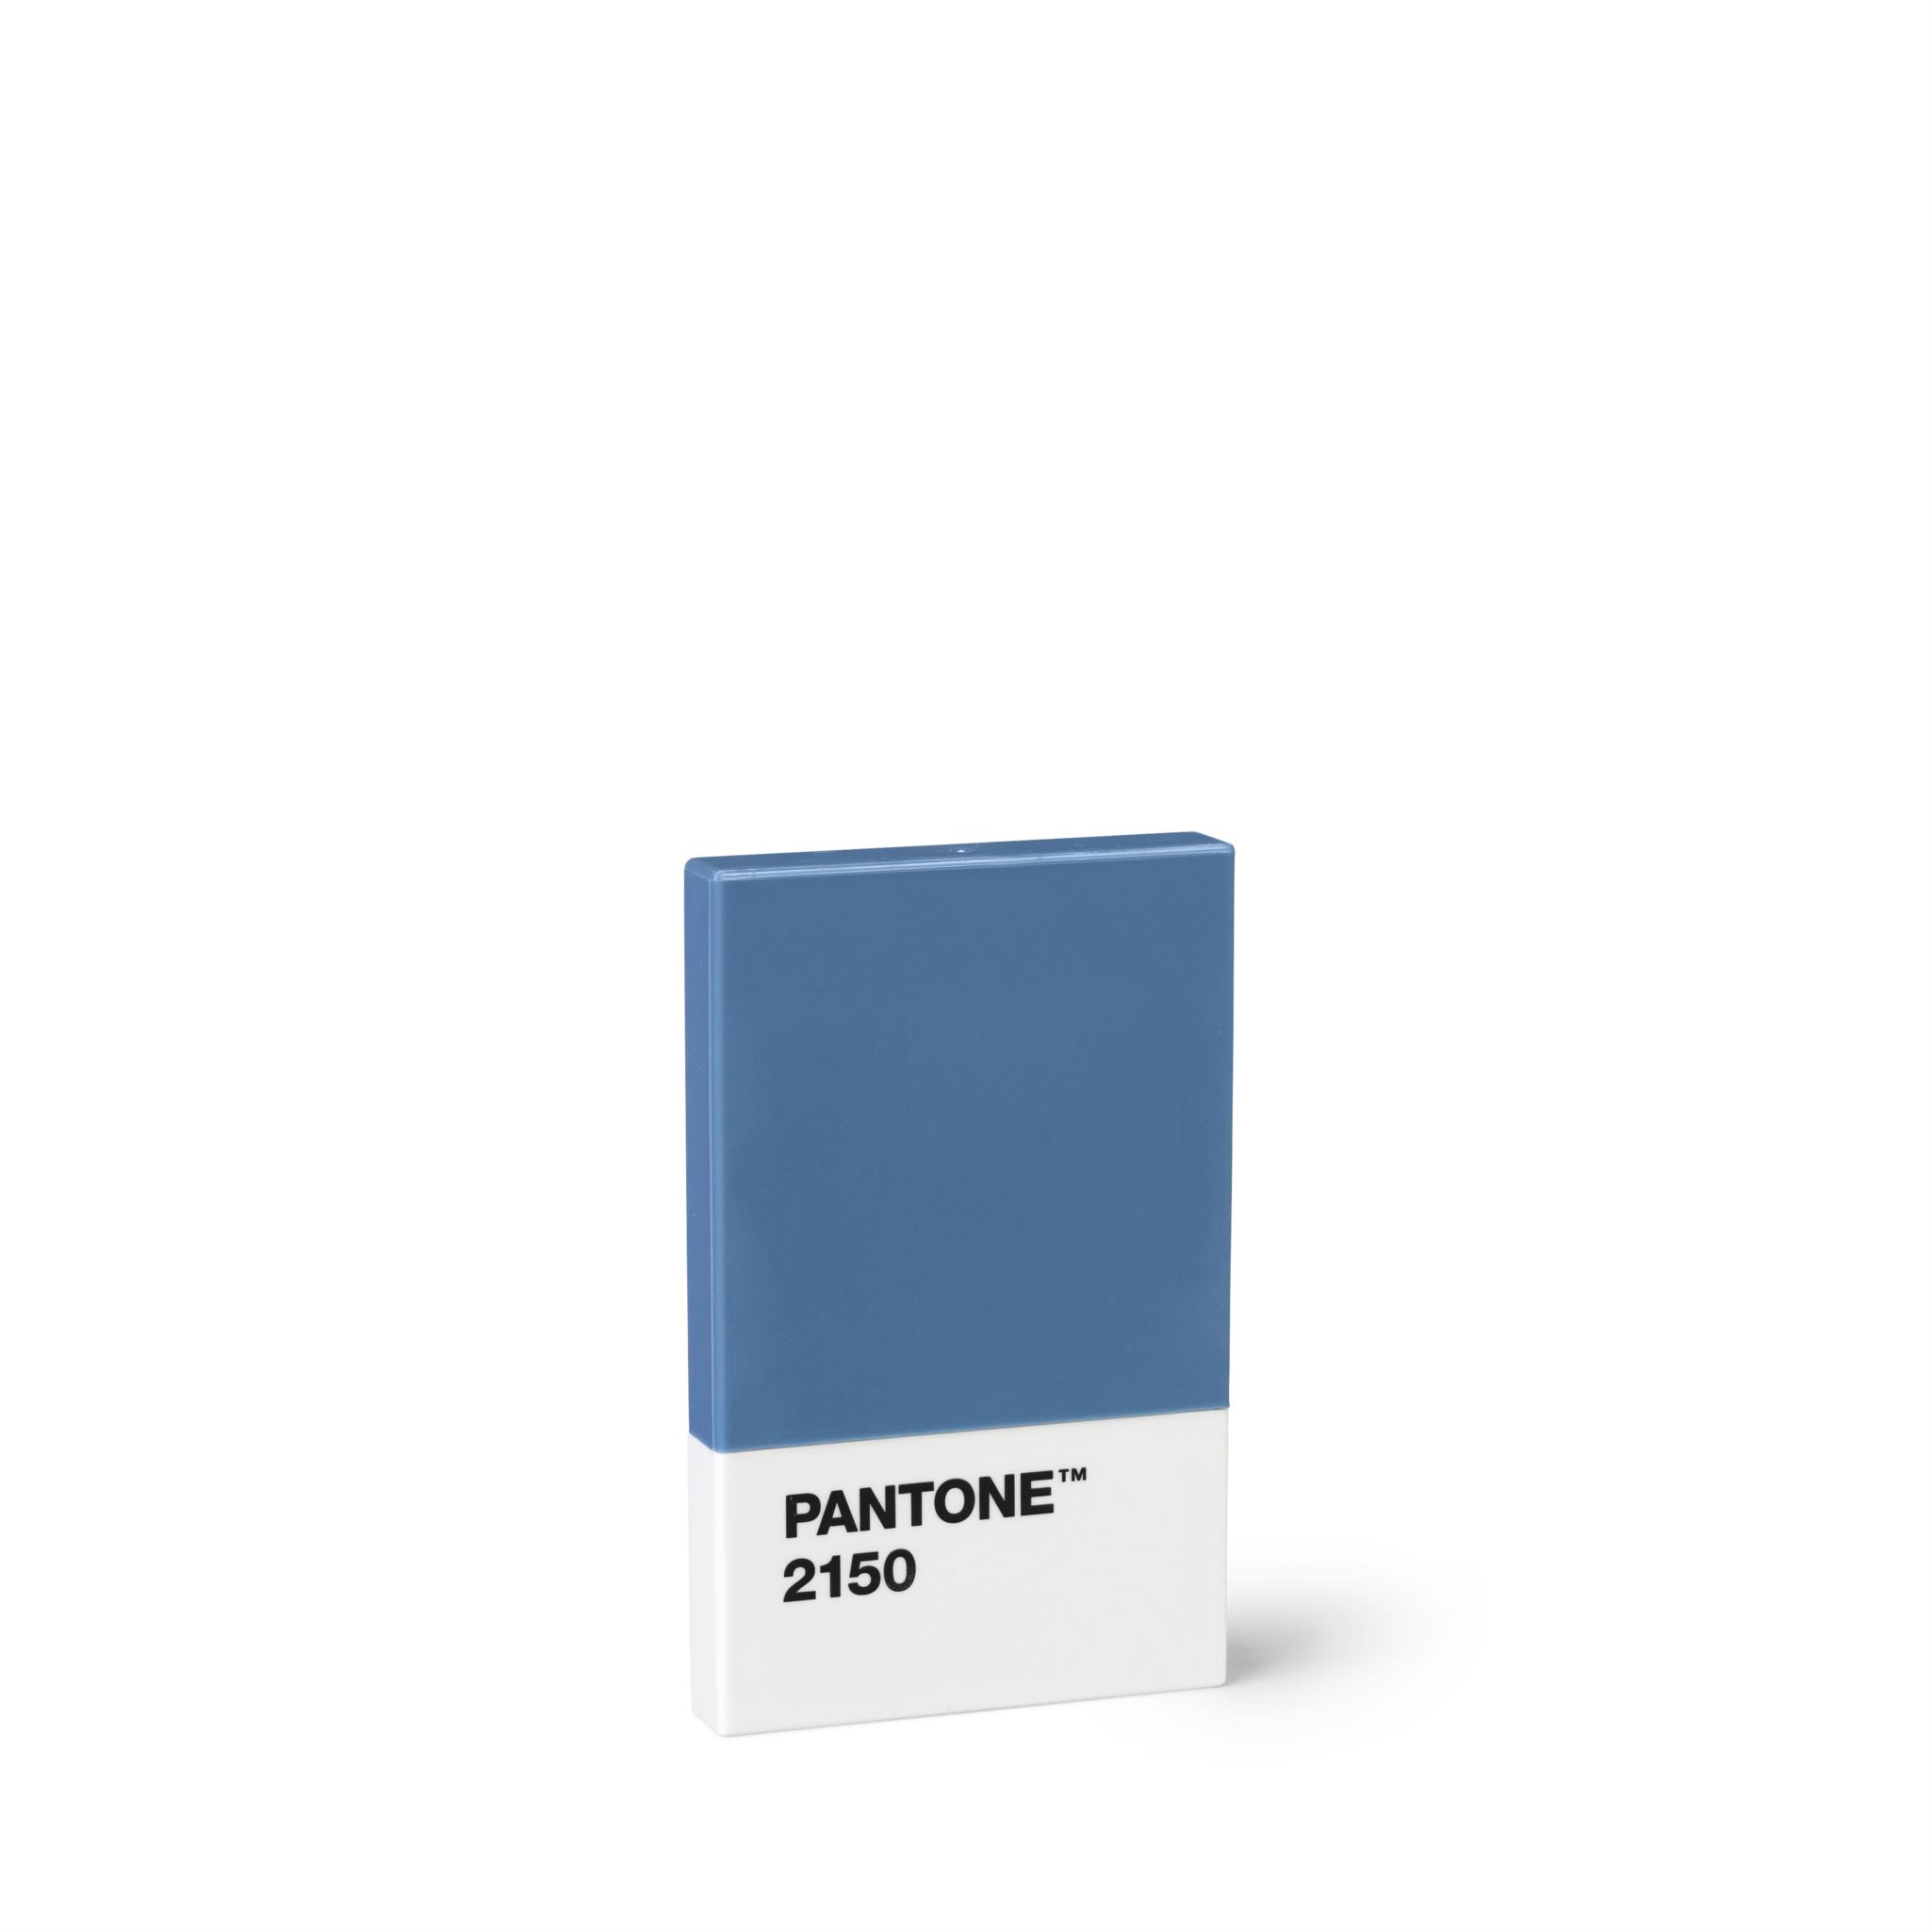 PANTONE BLUE BUSINESS CARD HOLDER